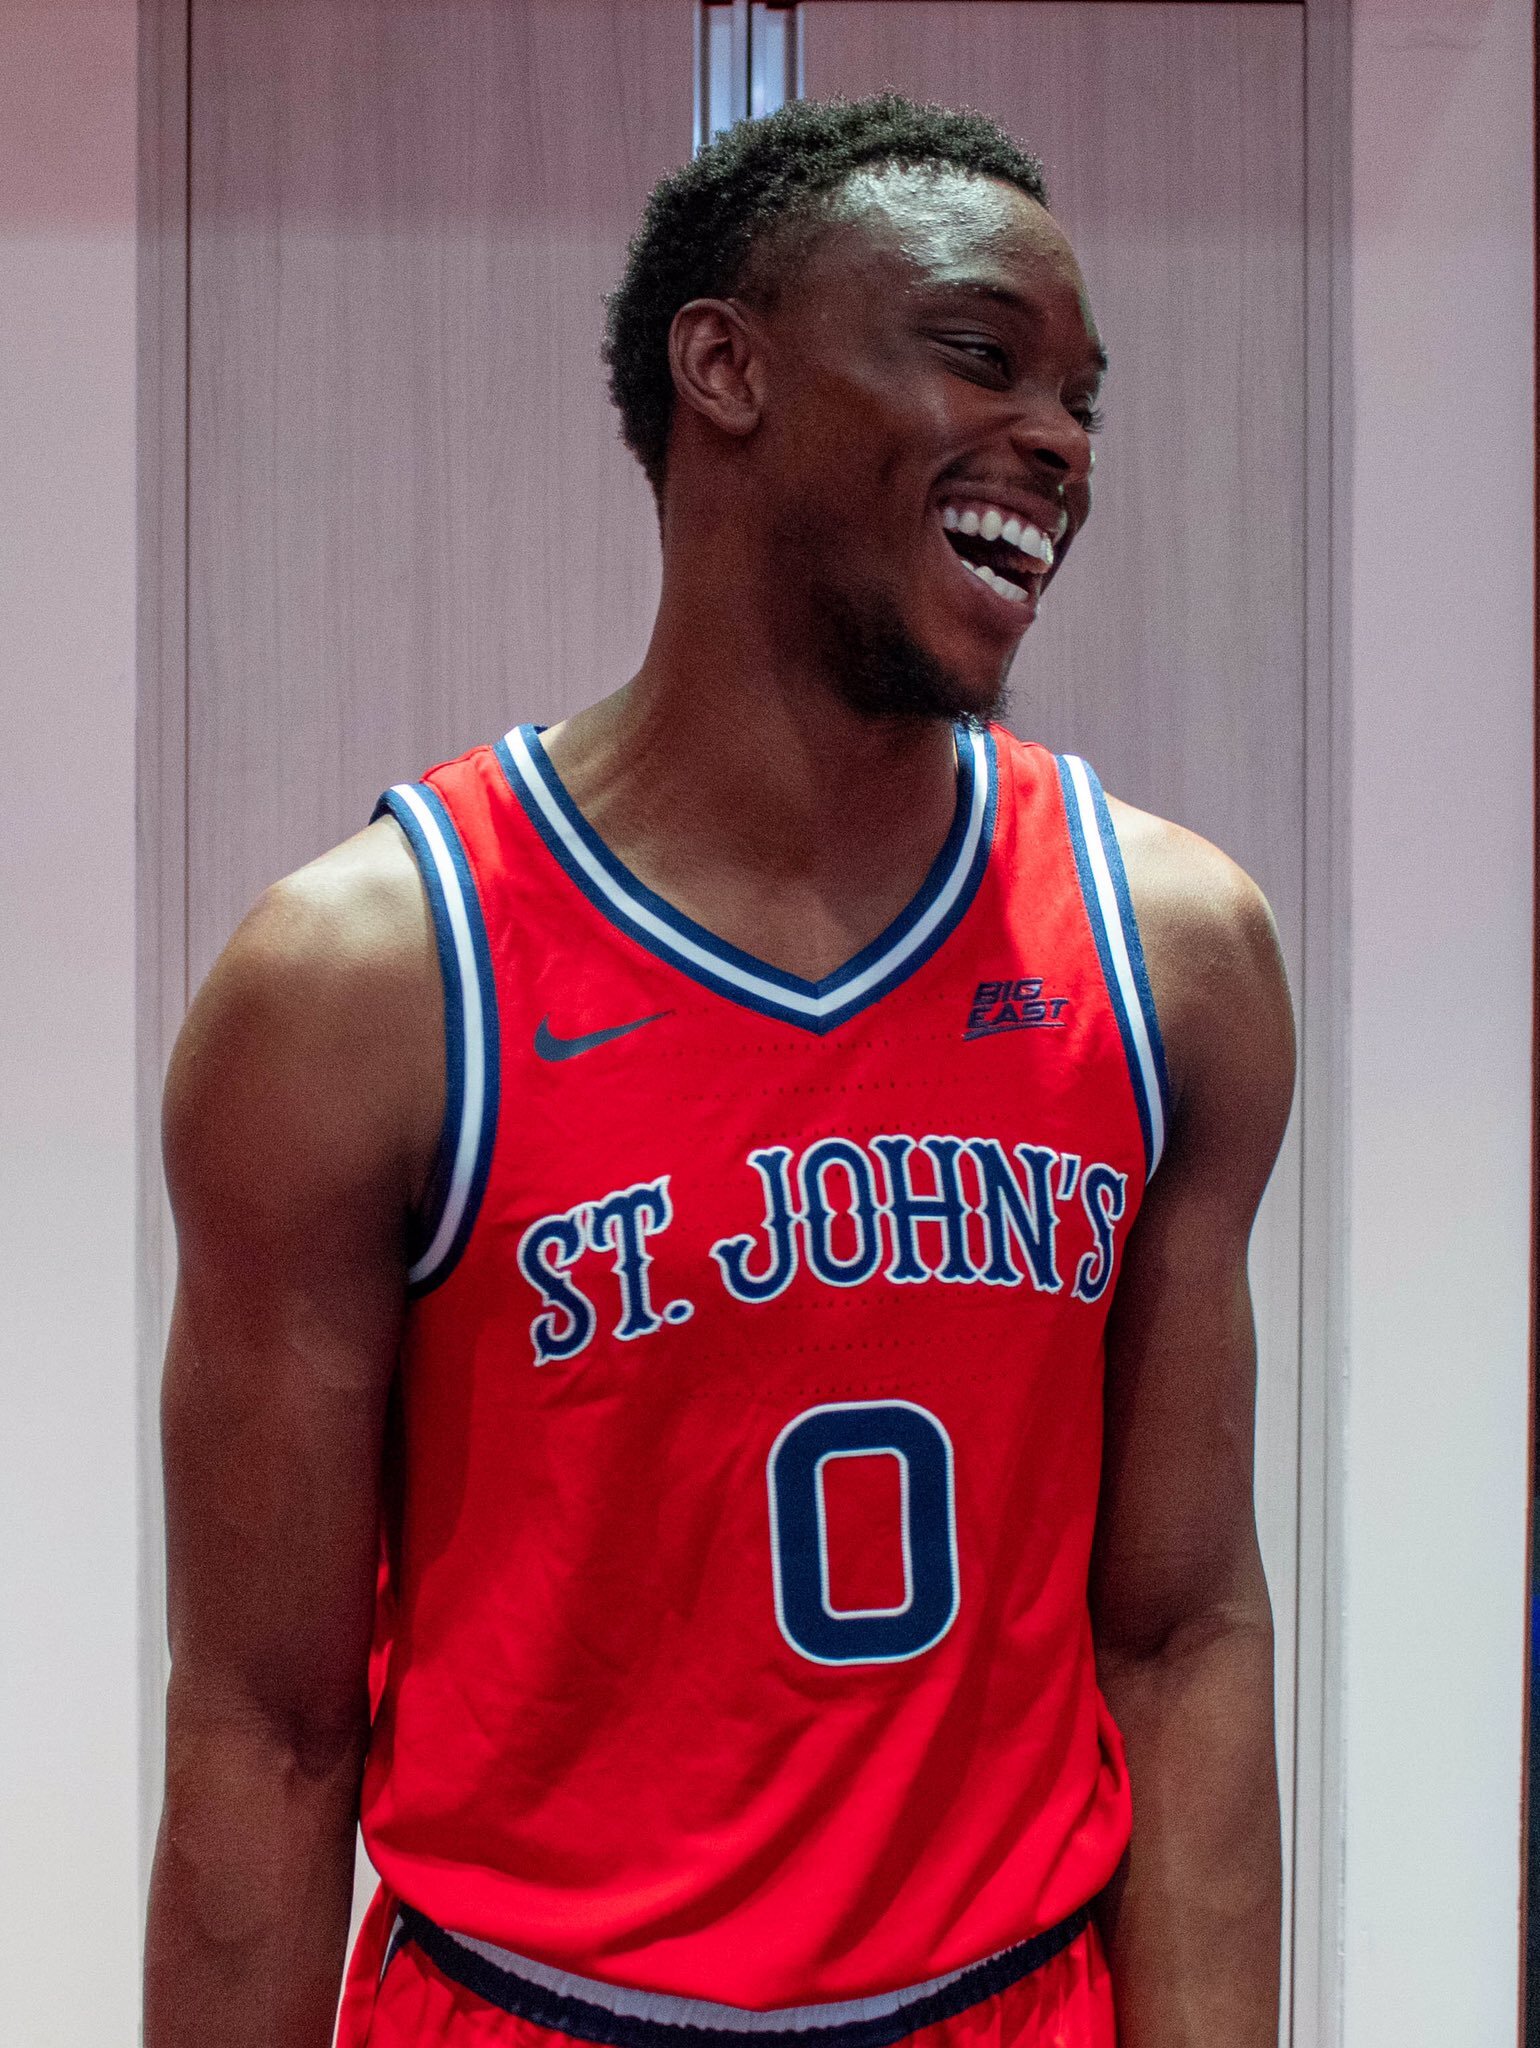 New St. John's Basketball Uniform 